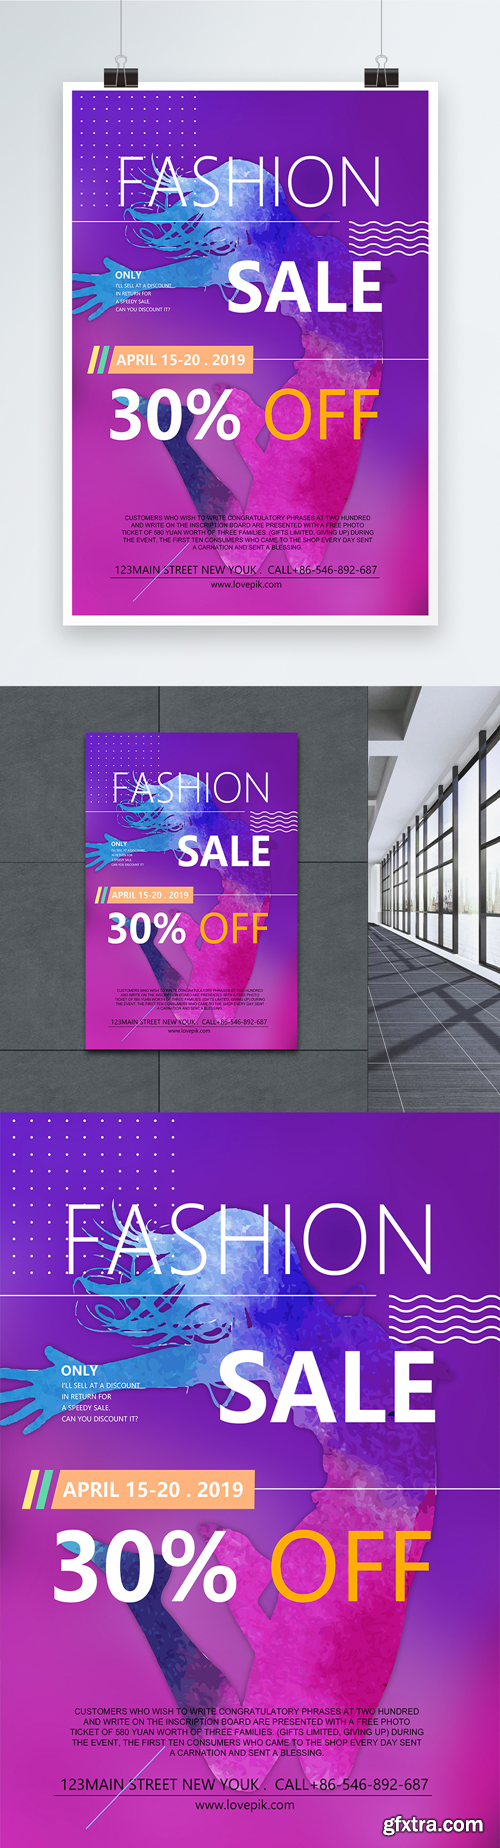 purple fashion sale poster